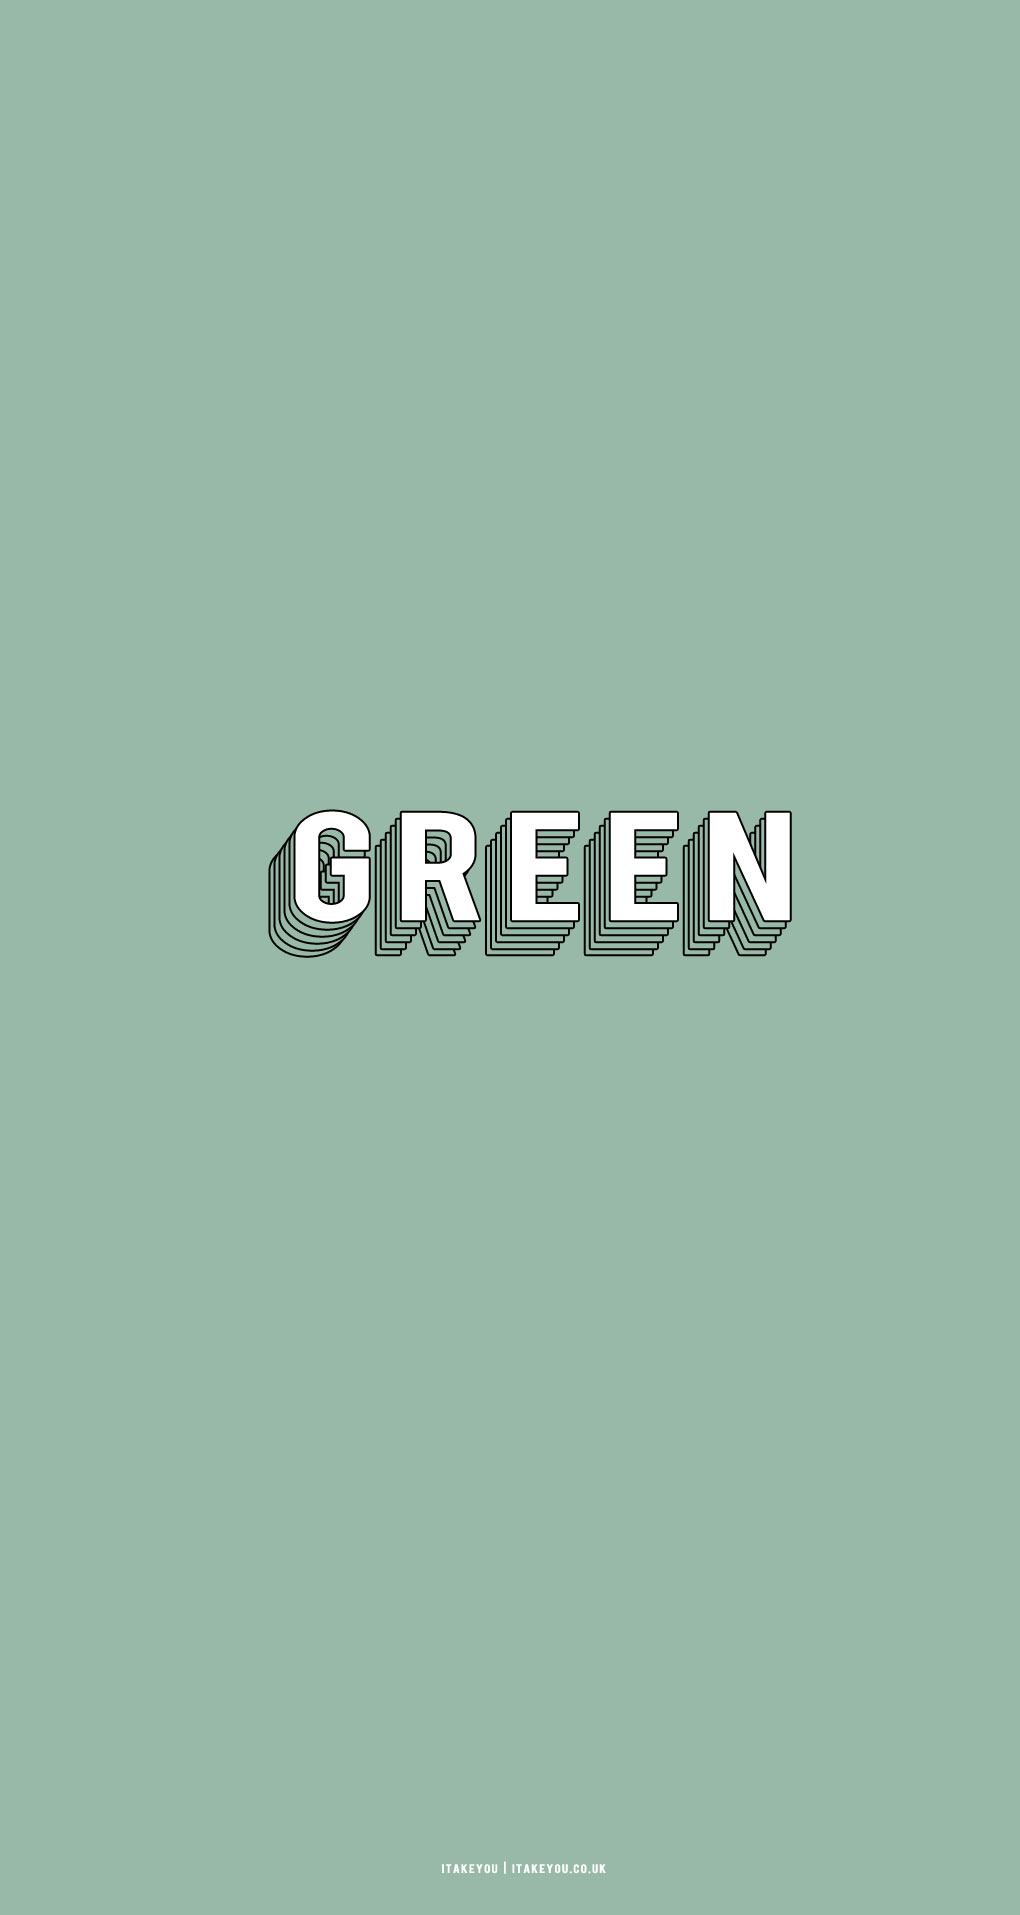 39+] Green Minimalist Aesthetic Wallpapers - WallpaperSafari